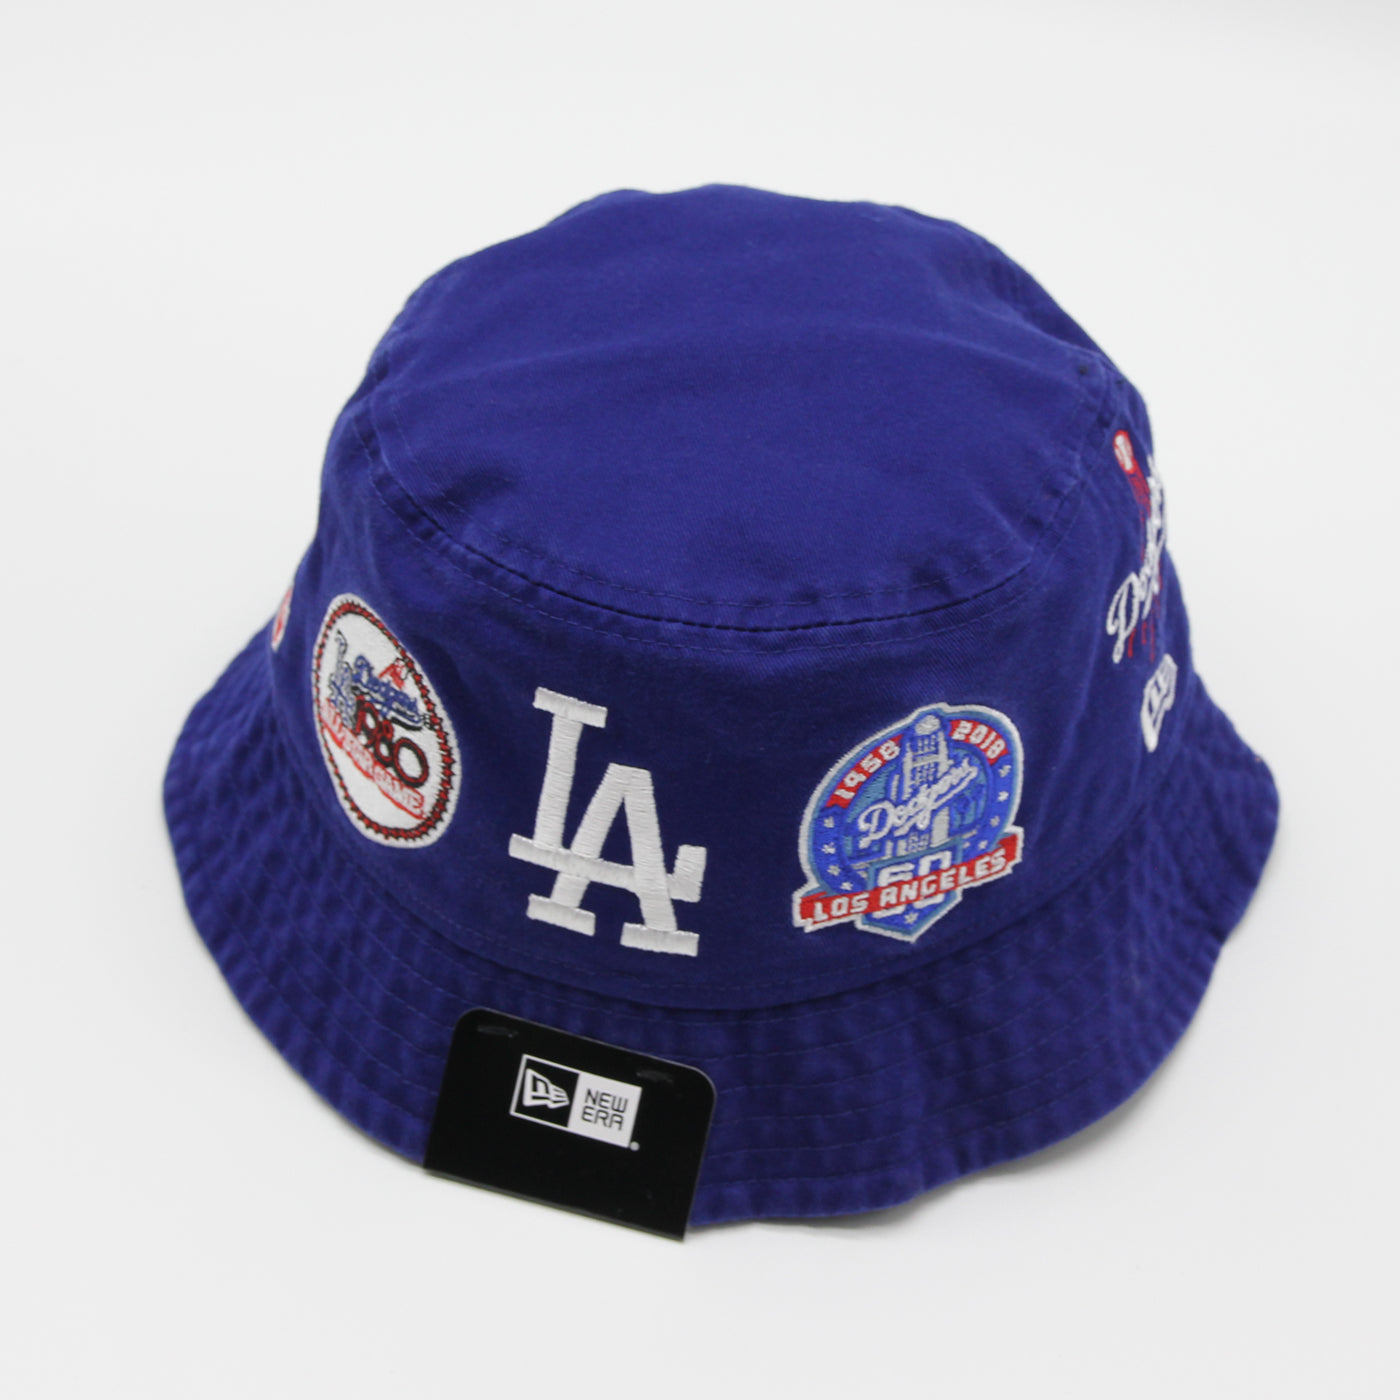 New Era Cooperstown Multi Patch Blue Bucket Hat LA Dodgers blue